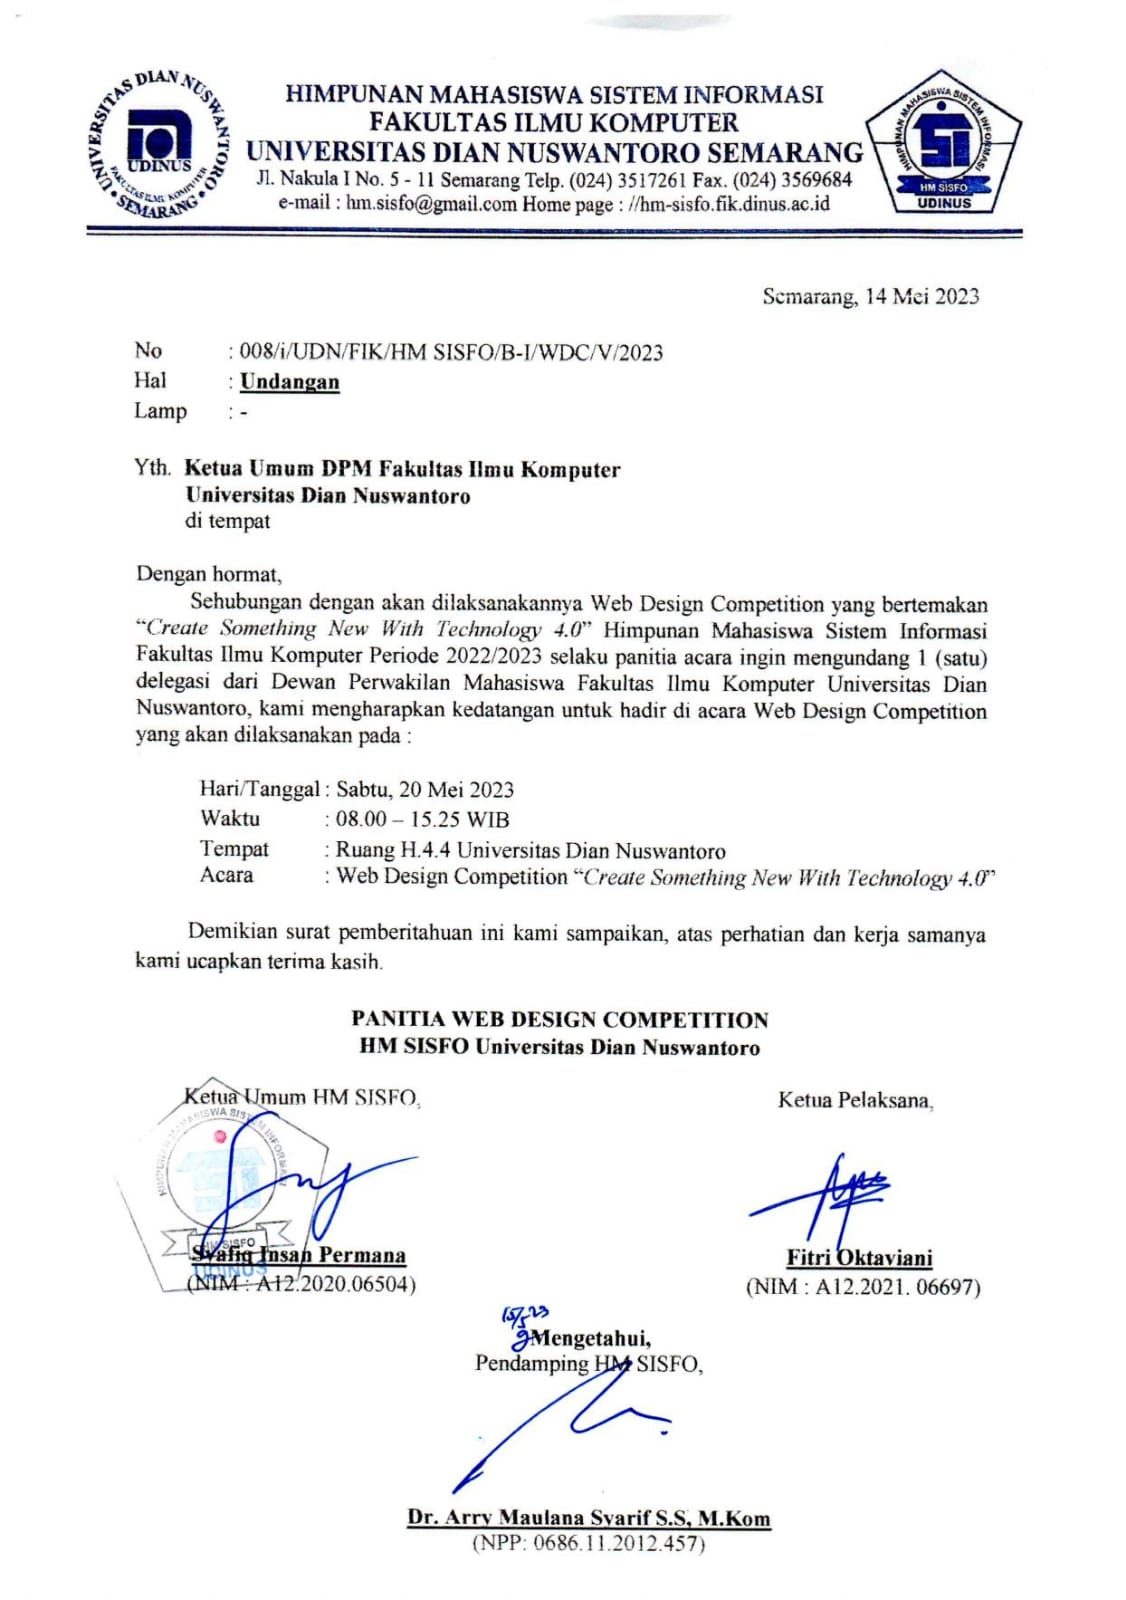 Surat Undangan Delegasi Dewan Perwakilan Mahasiswa Fakultas Ilmu Komputer Universitas Dian Nuswantoro